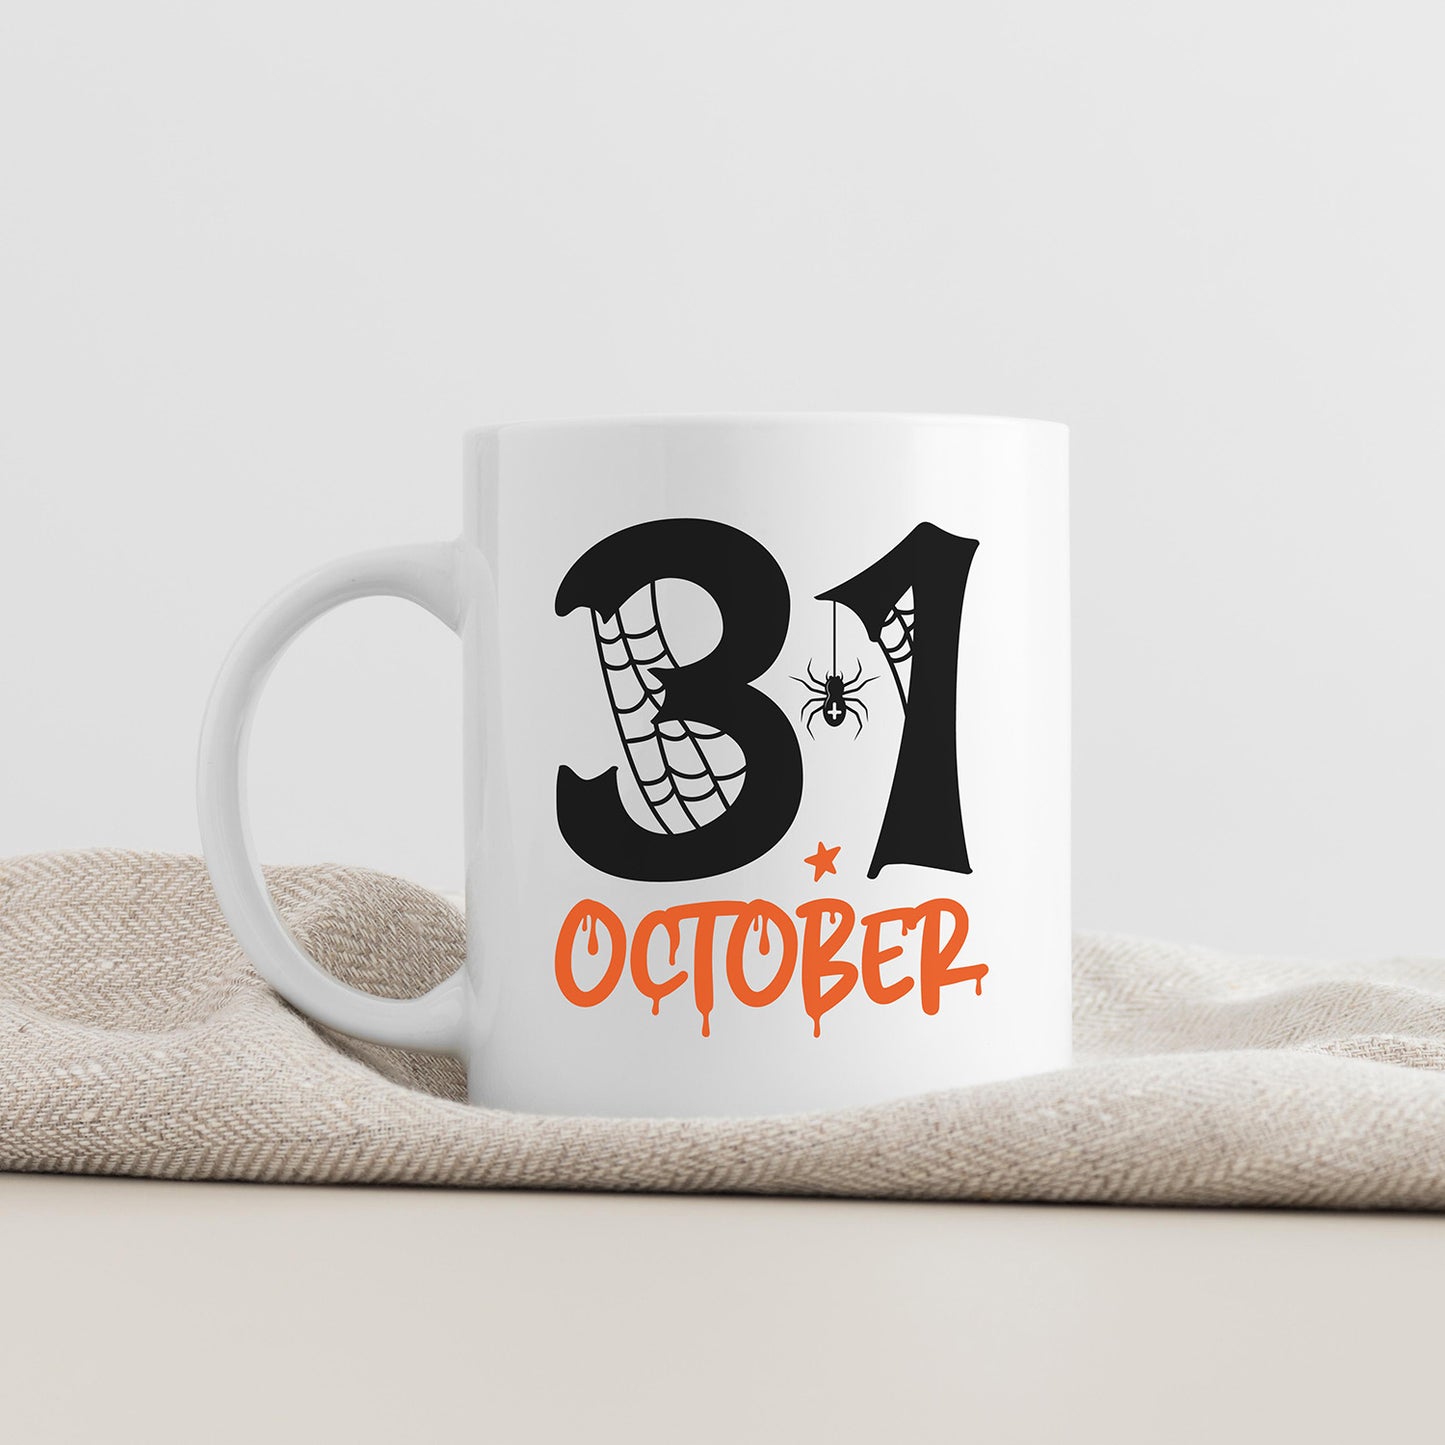 "31 October" Graphic